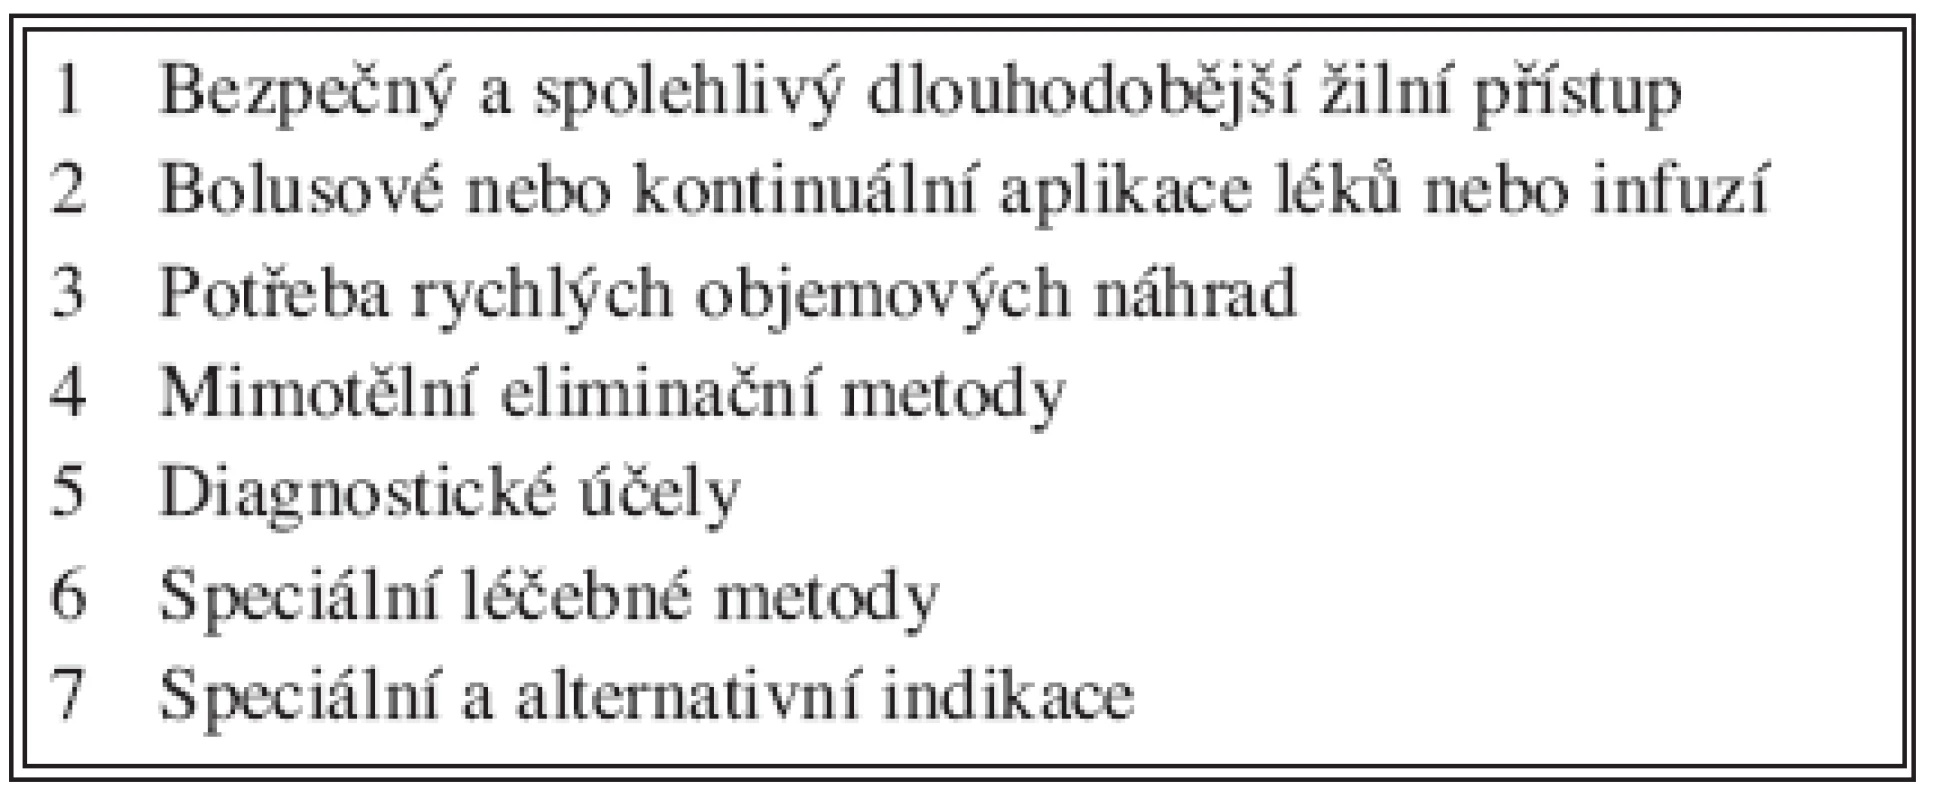 Indikace CŽK
Tab. 1. Indications of CVC